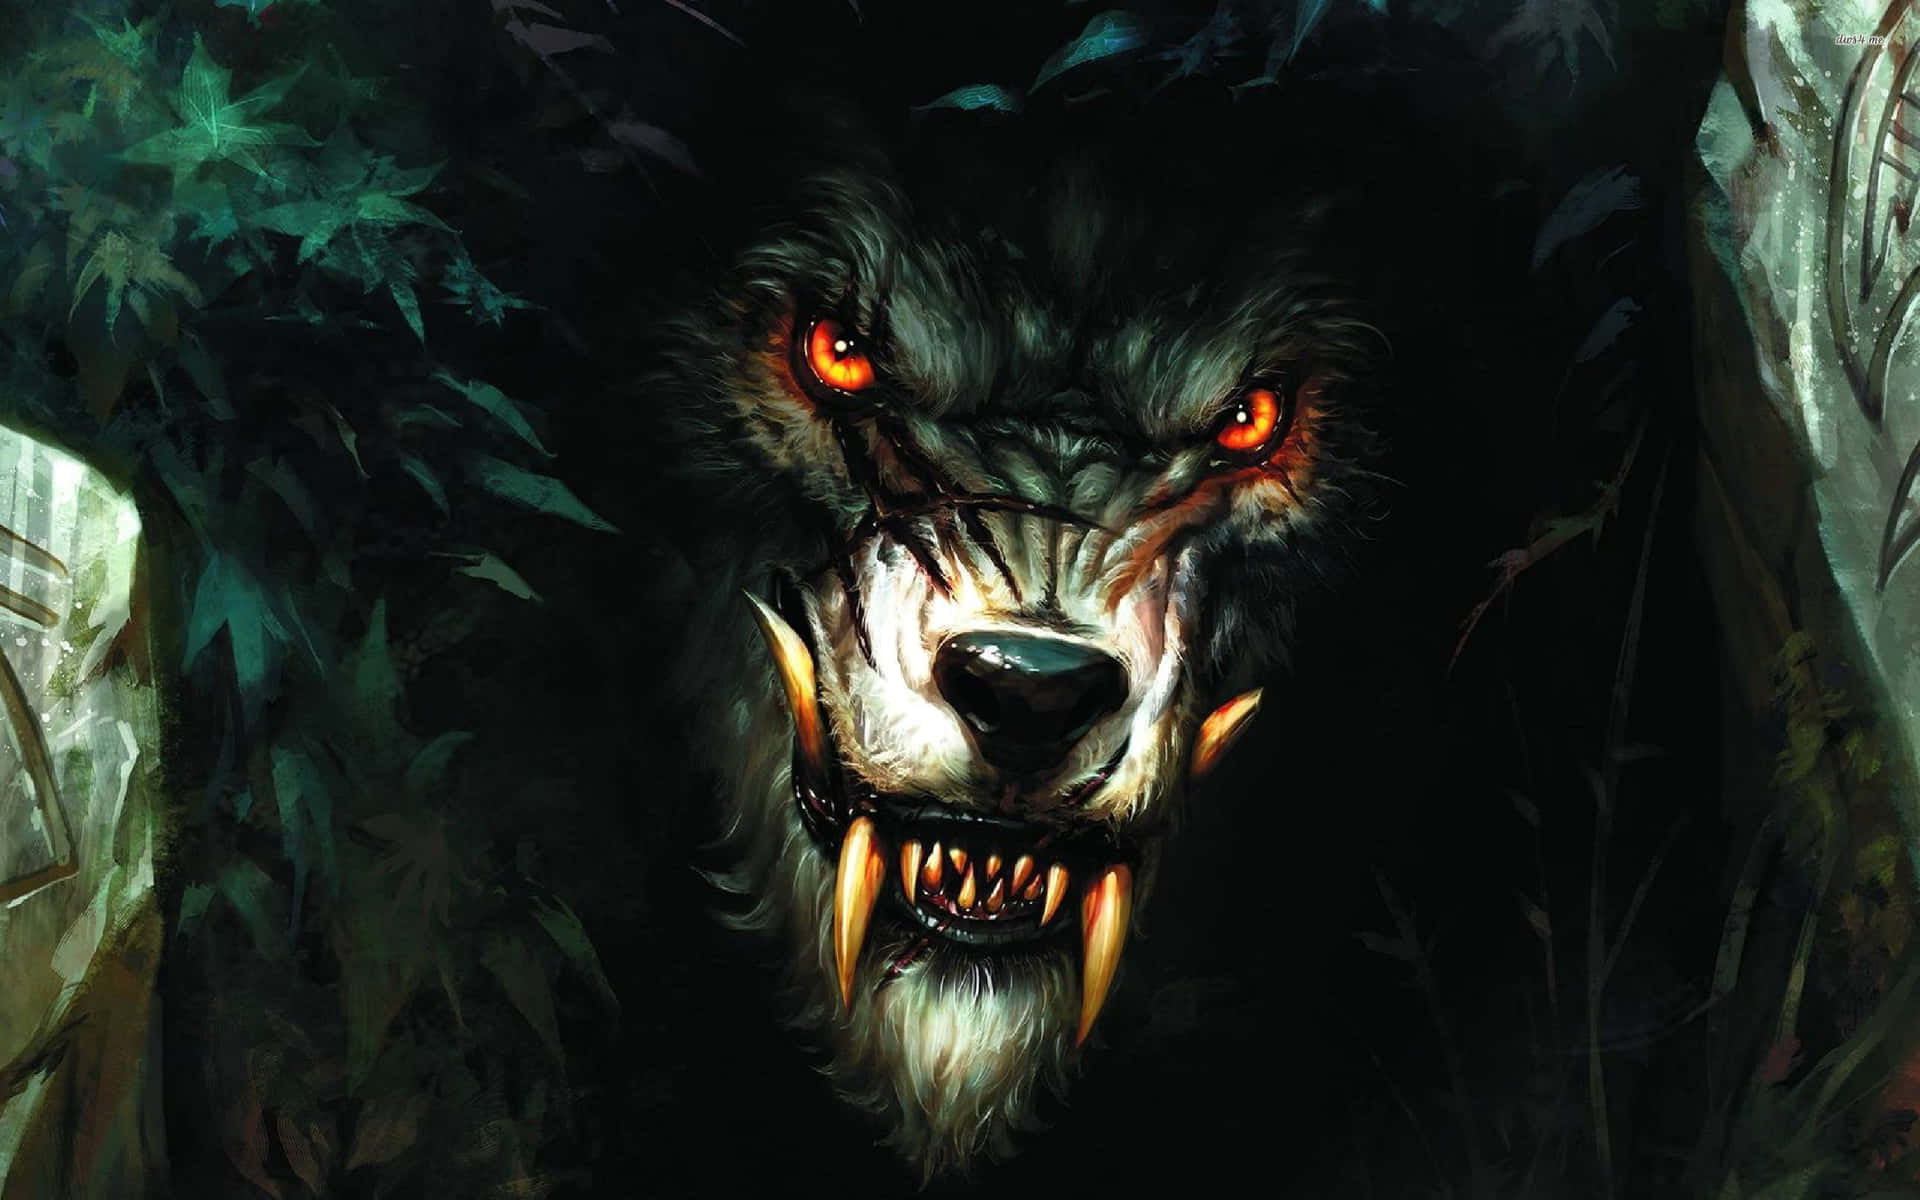 The Dreadful Werewolf Lurking in the Darkness